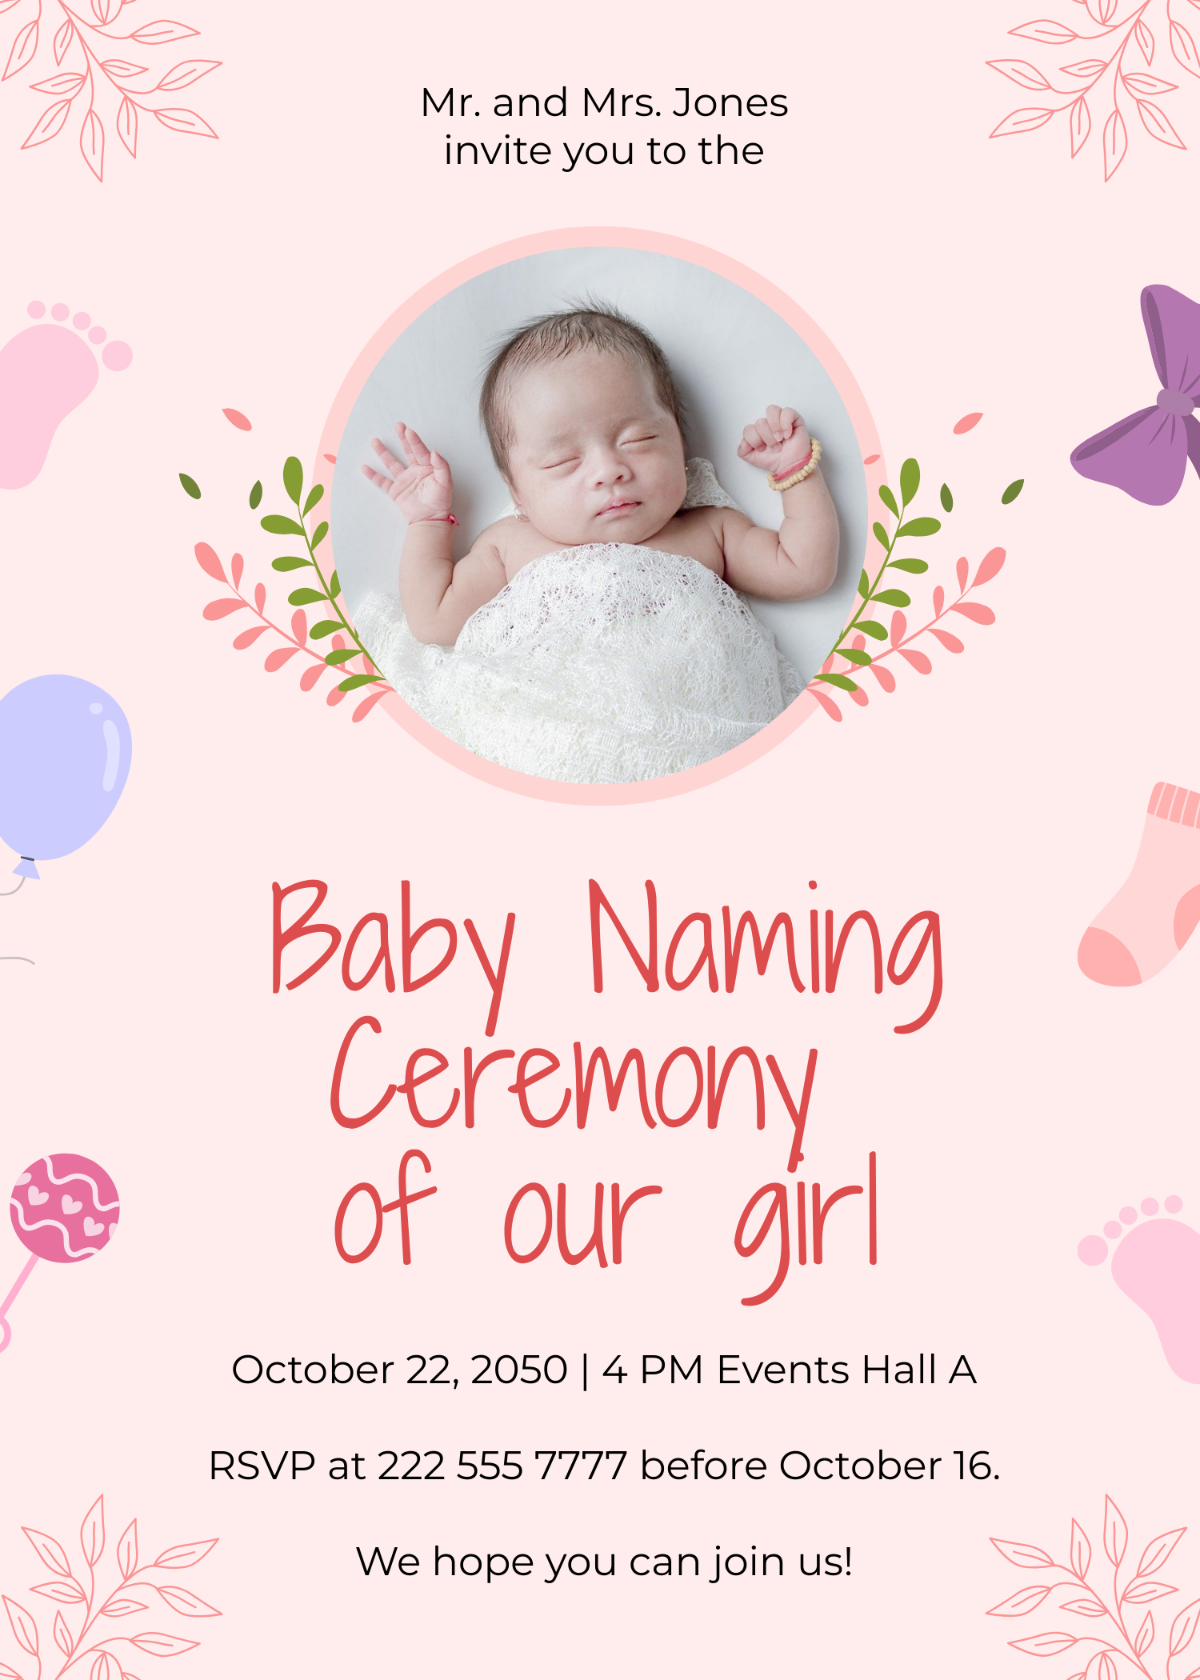 Naming Ceremony Invitation Card With Baby Photo